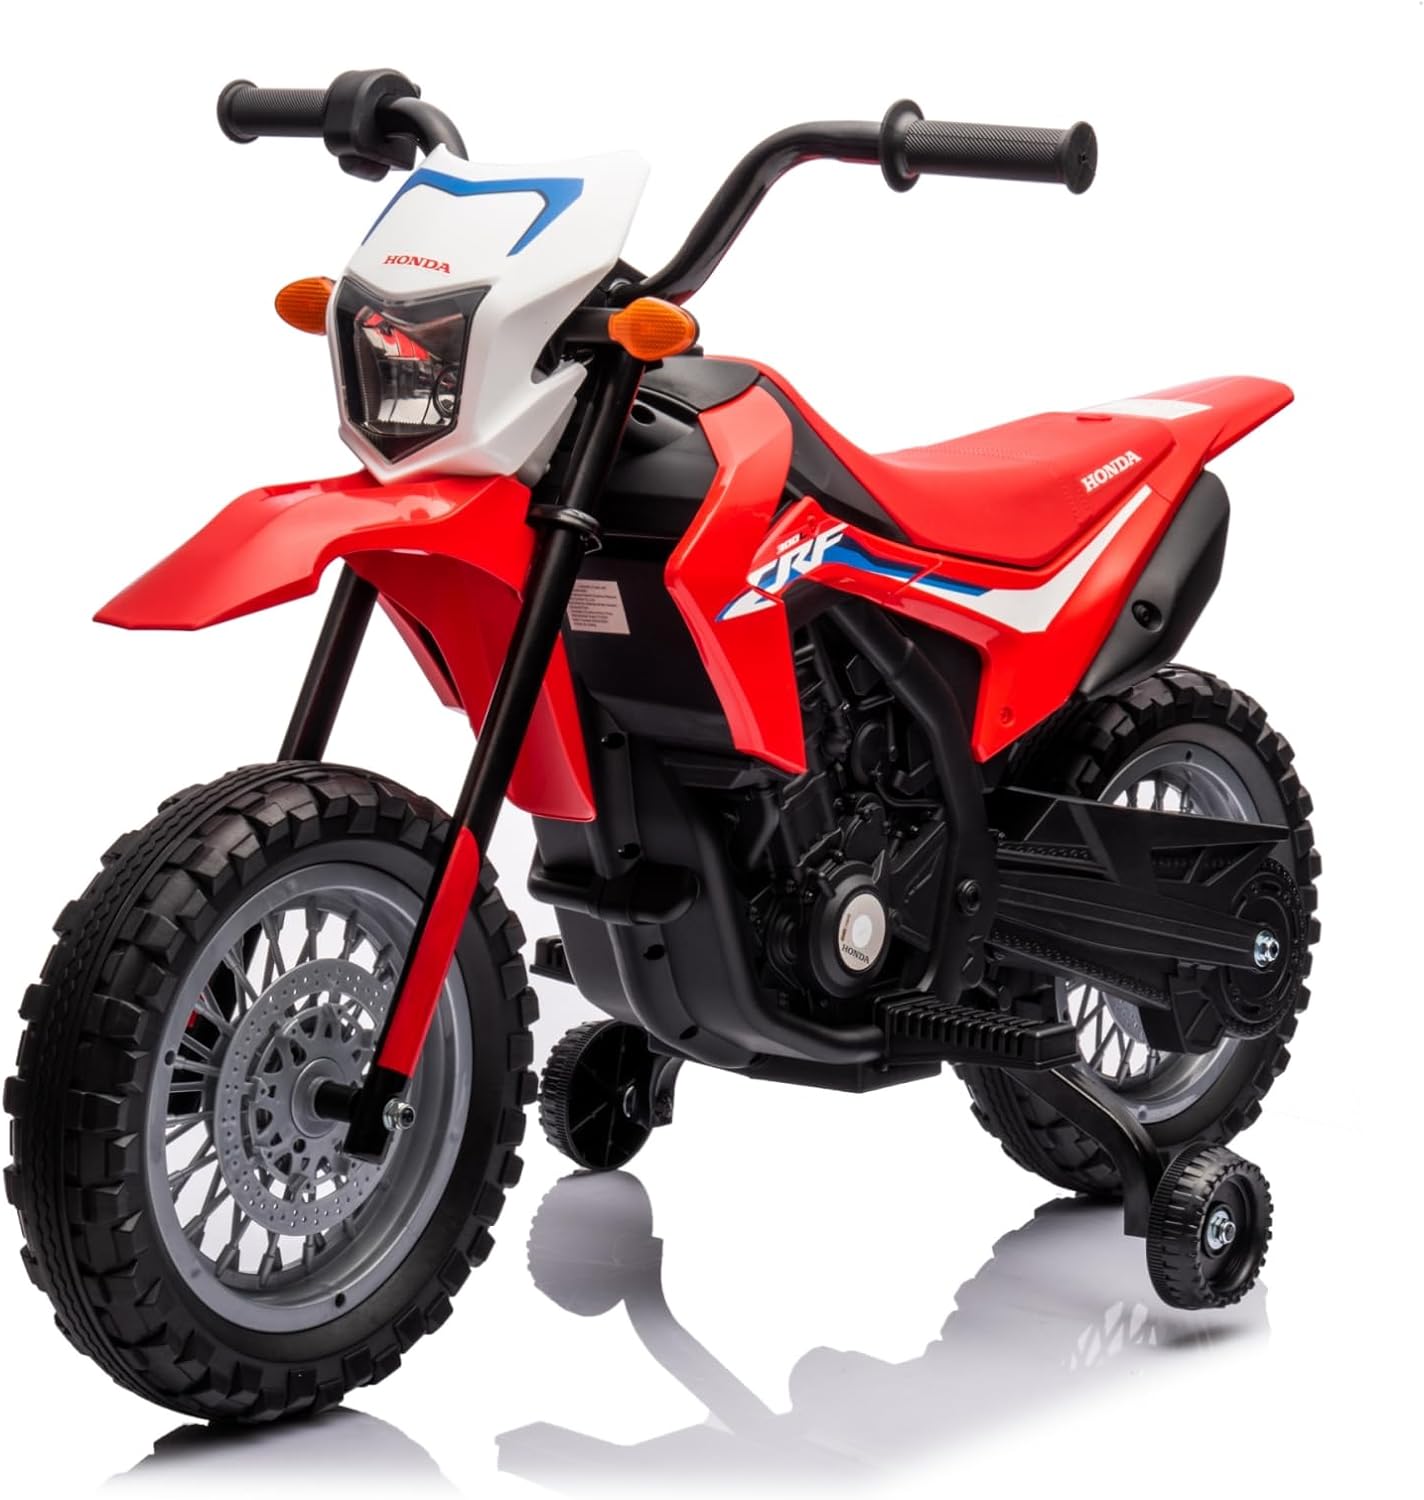 GARVEE 6V Licensed Honda Kids Ride-On Motorcycle: Detachable Training Wheels, Engine Sounds, Rechargeable, Pink, for Boys & Girls